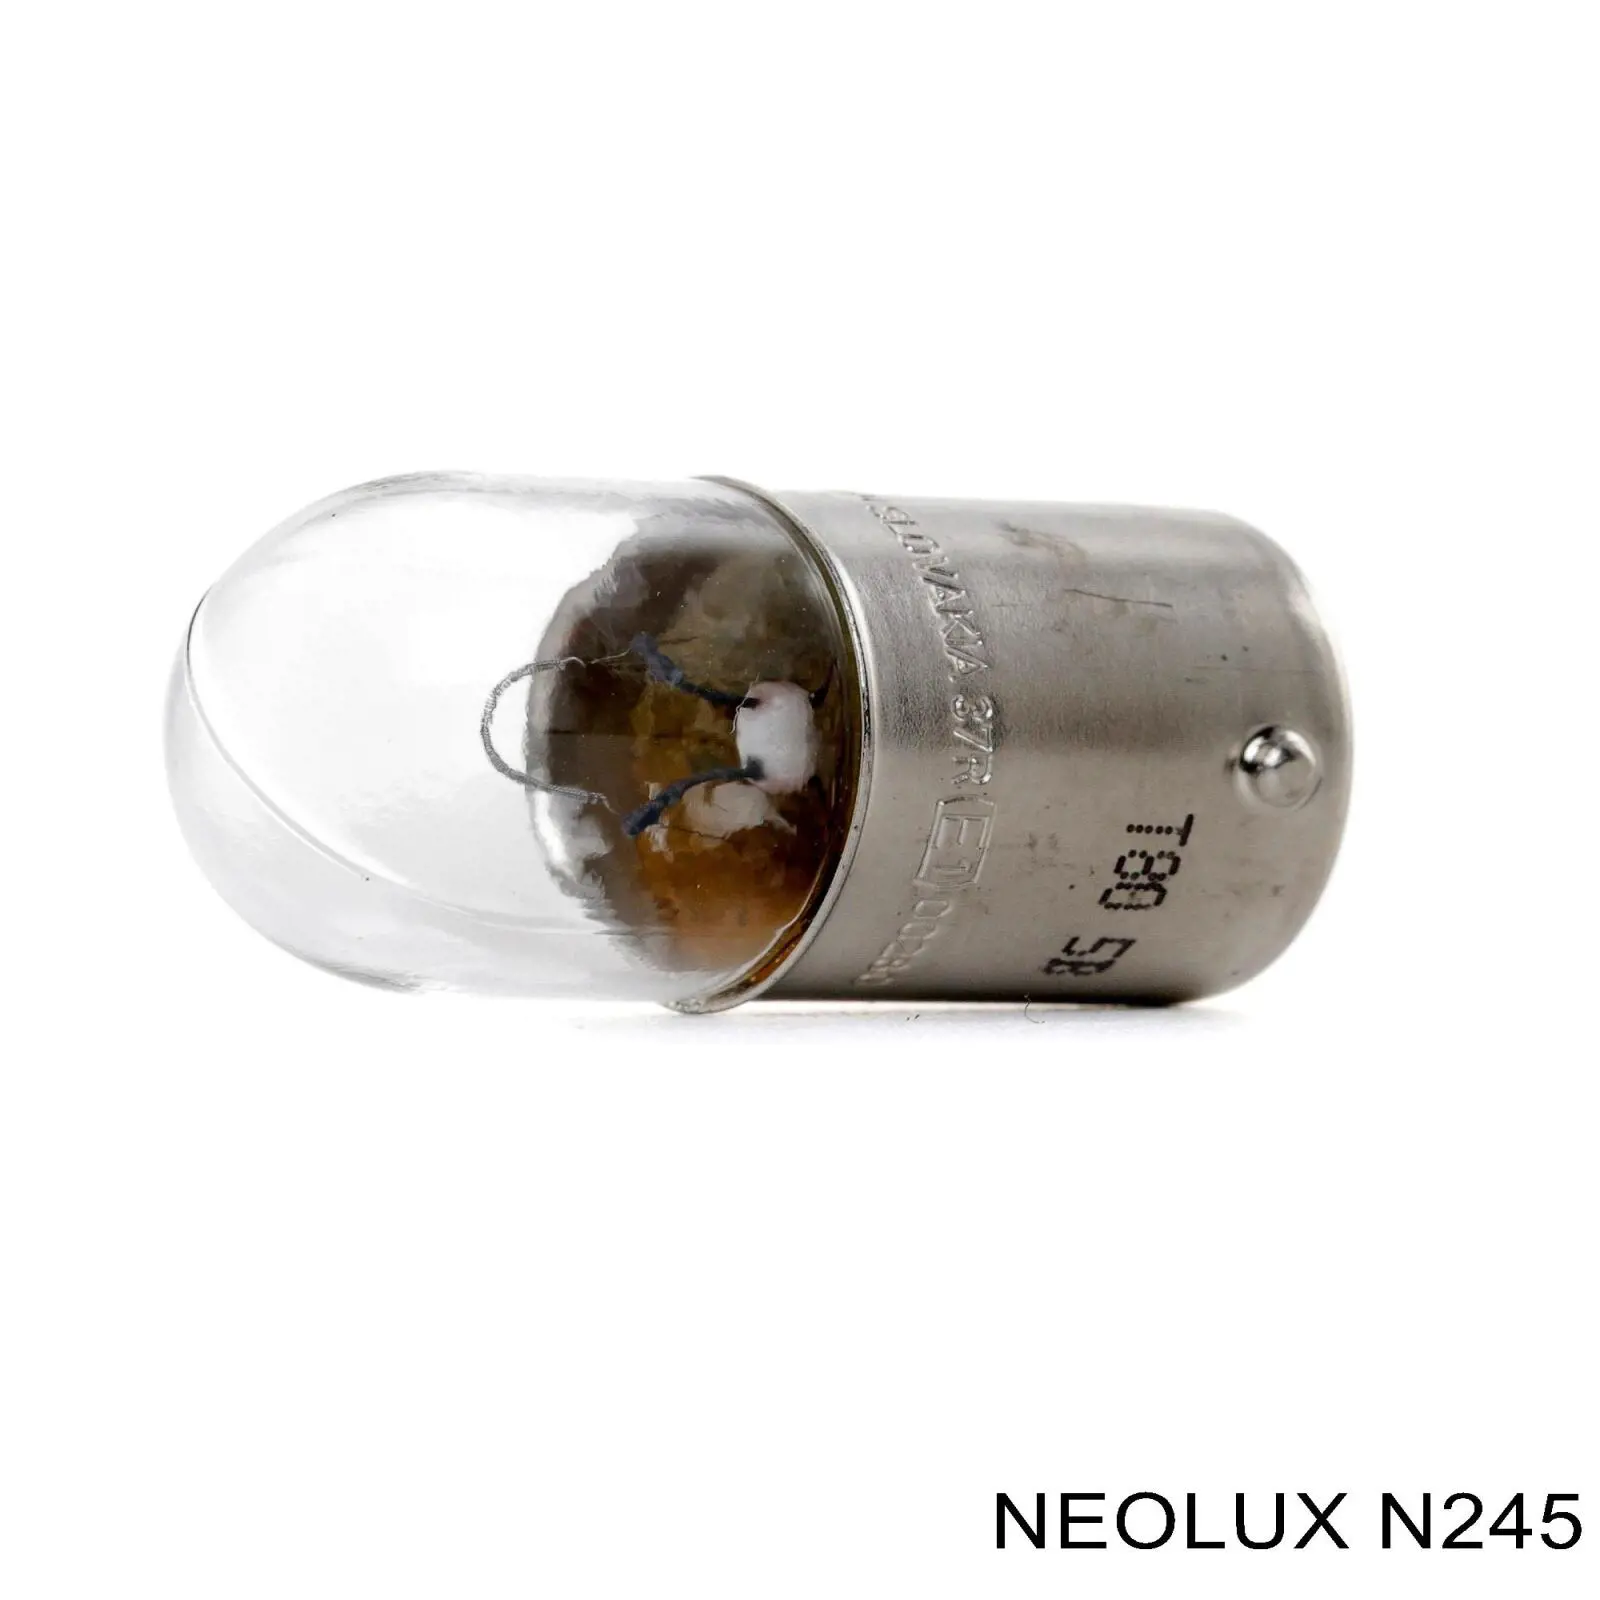 N245 Neolux bombilla